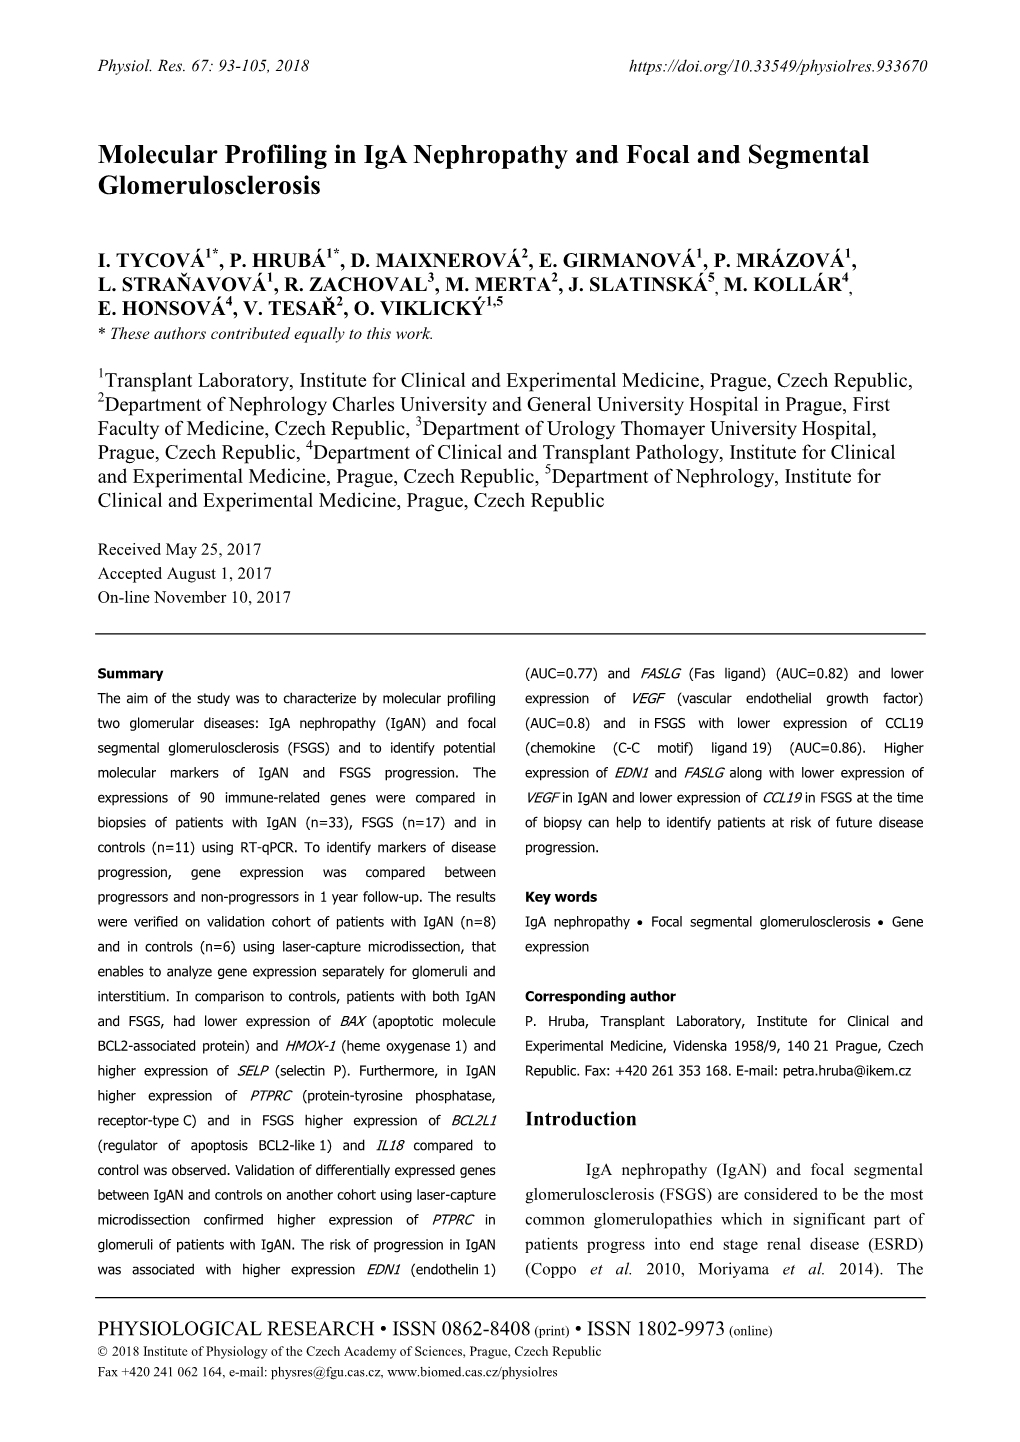 Molecular Profiling in Iga Nephropathy and Focal and Segmental Glomerulosclerosis